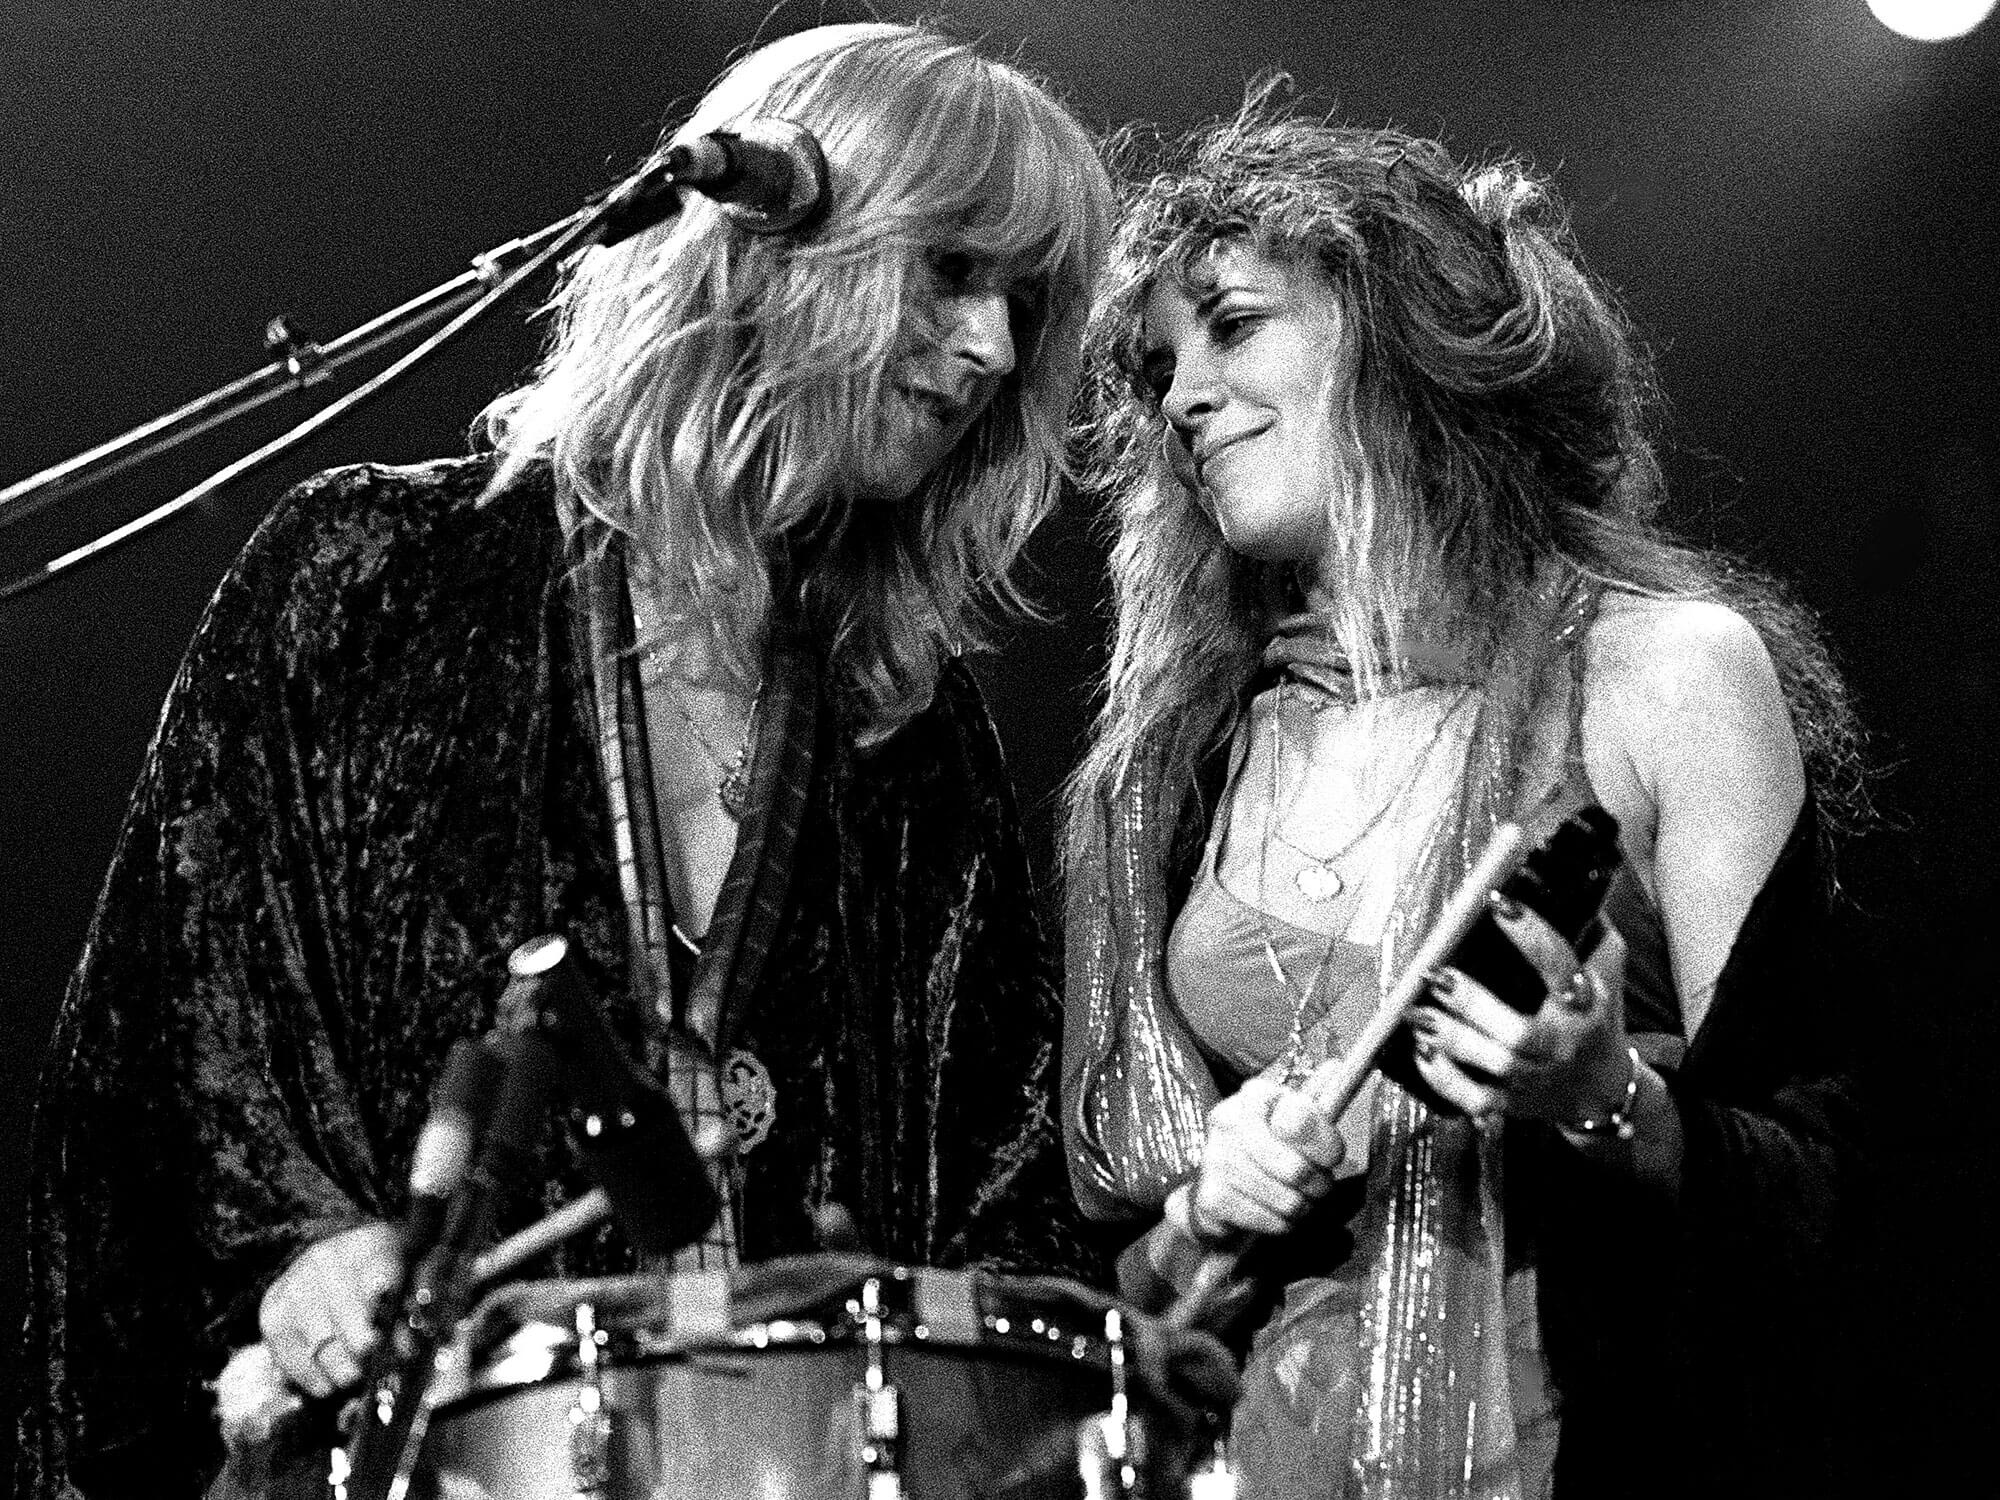 [L-R] Christine McVie and Stevie Nicks of Fleetwood Mac